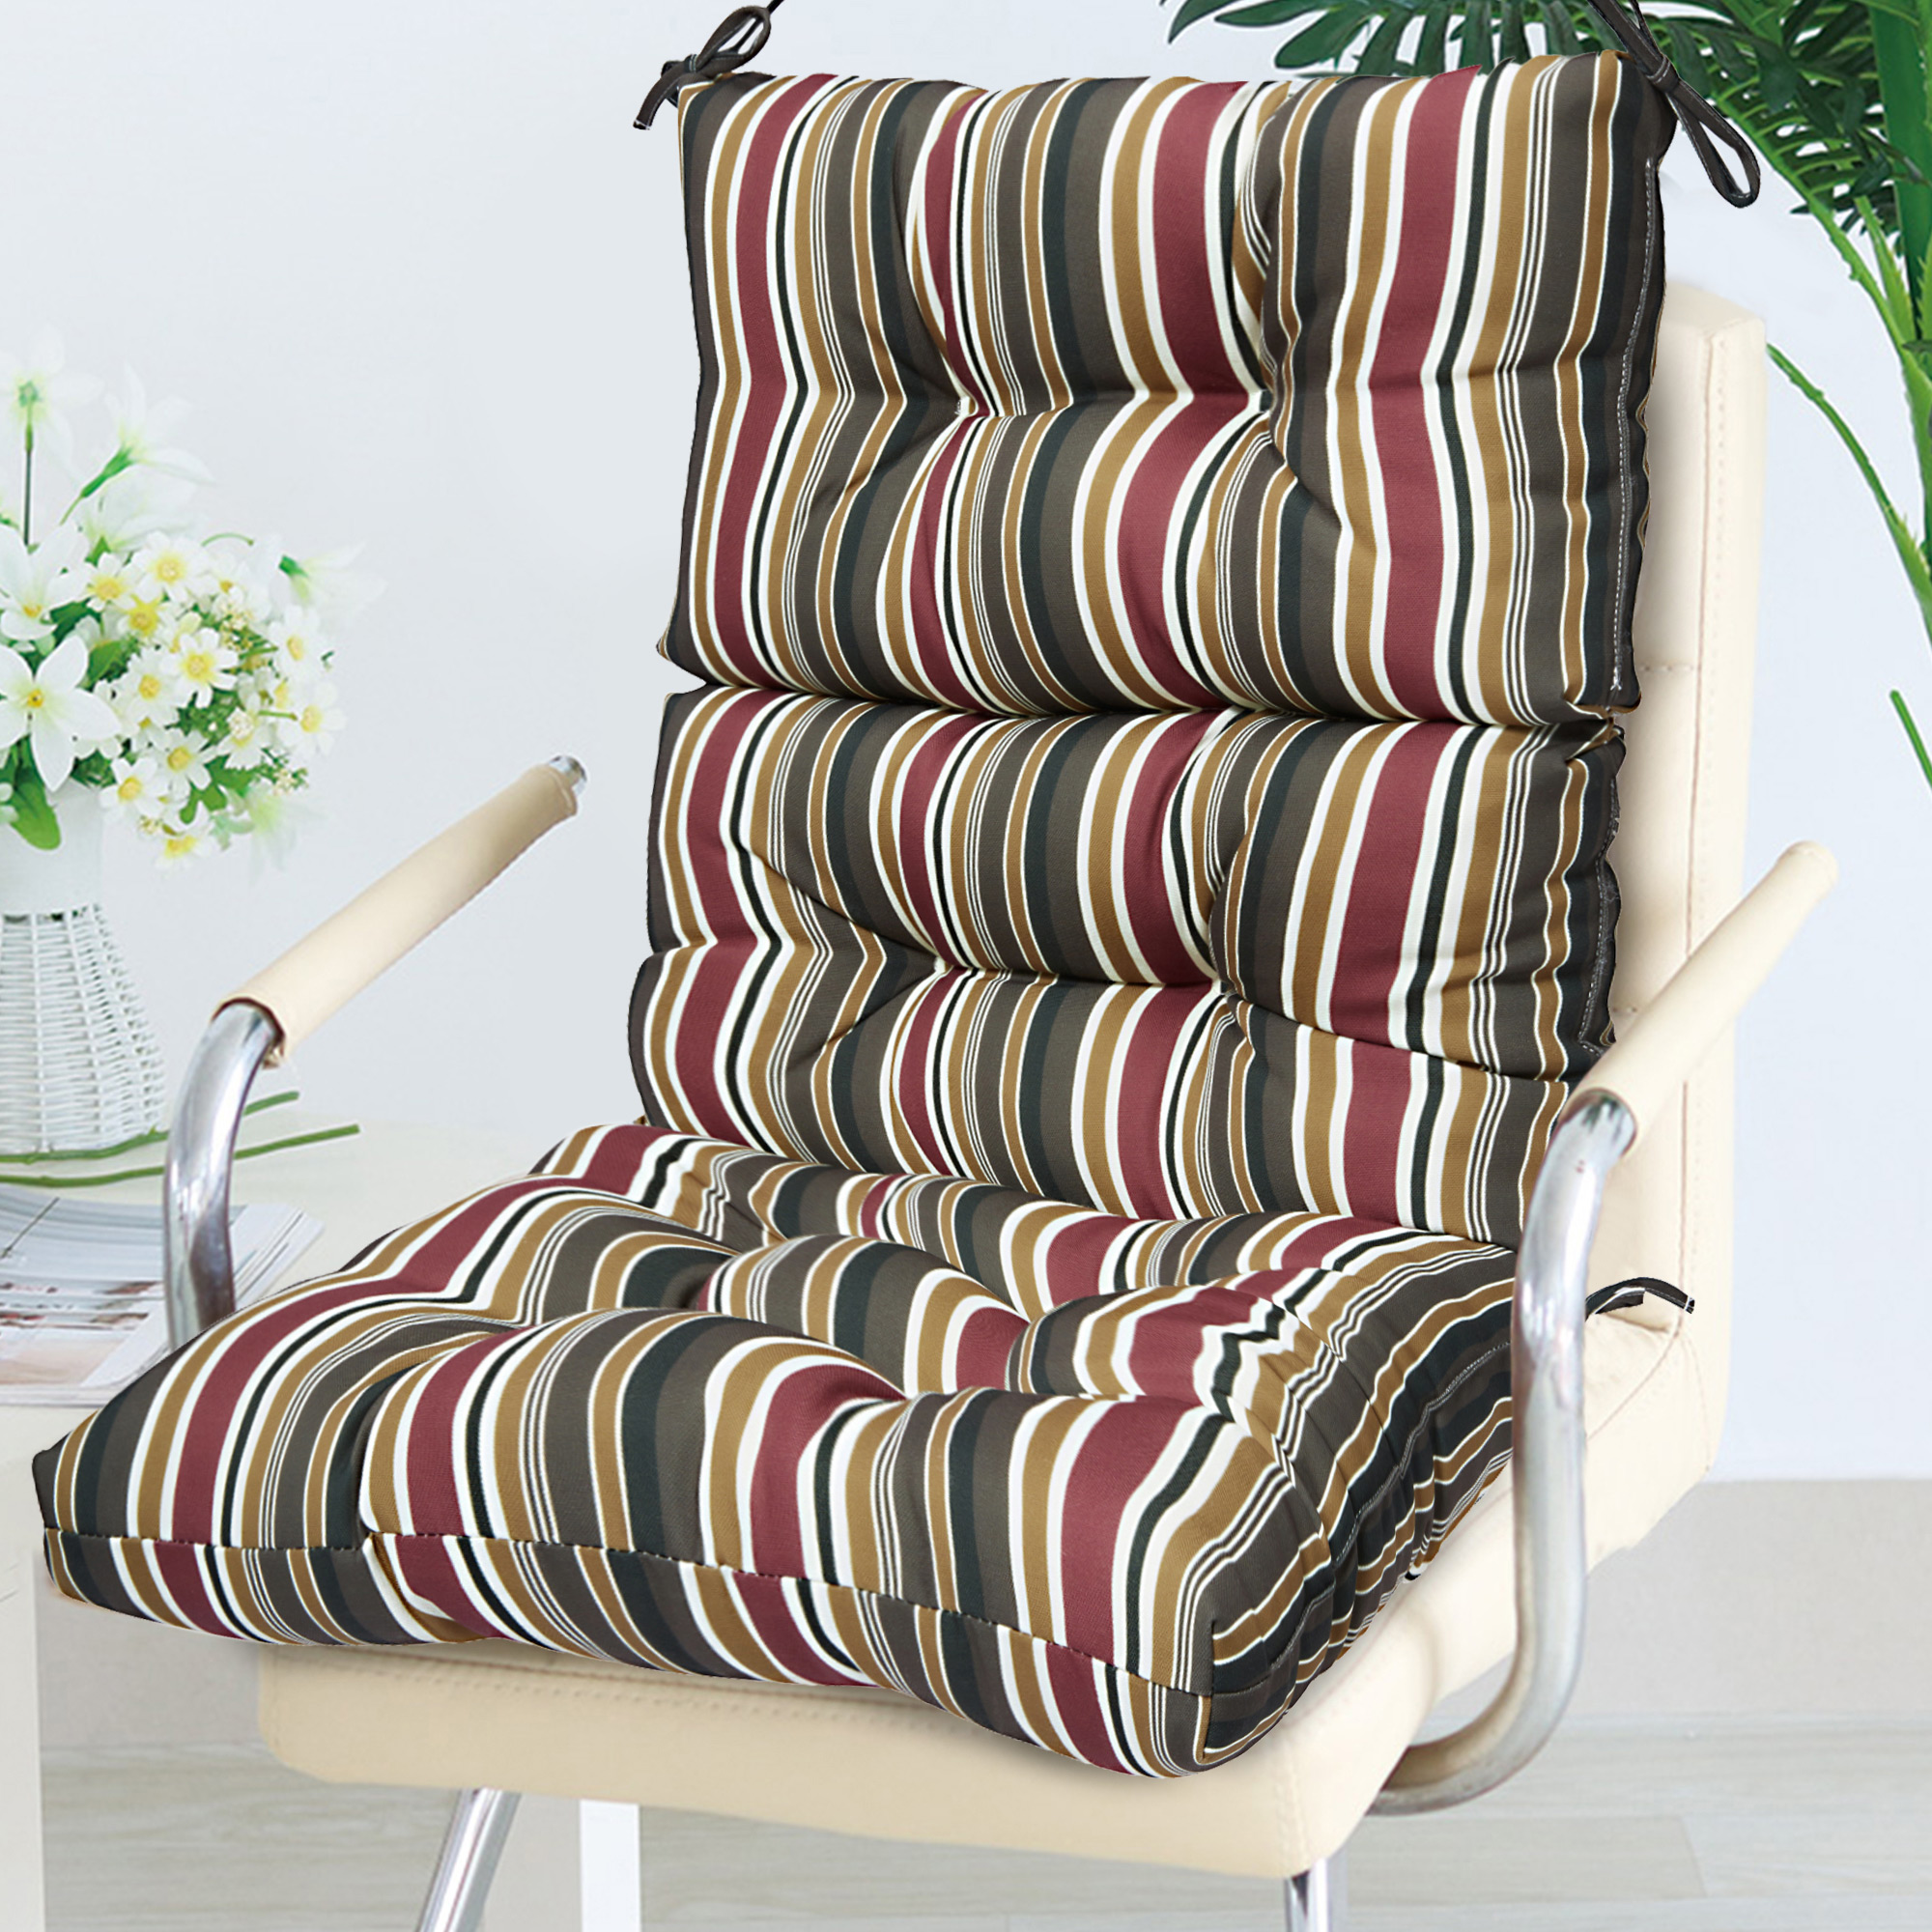 44x21 inch Outdoor Chair Cushion, 2/4pcs High Back Chair Cushions Patio Garden High Rebound Foam Chair Cushion Waterproof Polyester Seat Cushions or Home Patio Garden Decor - image 2 of 6